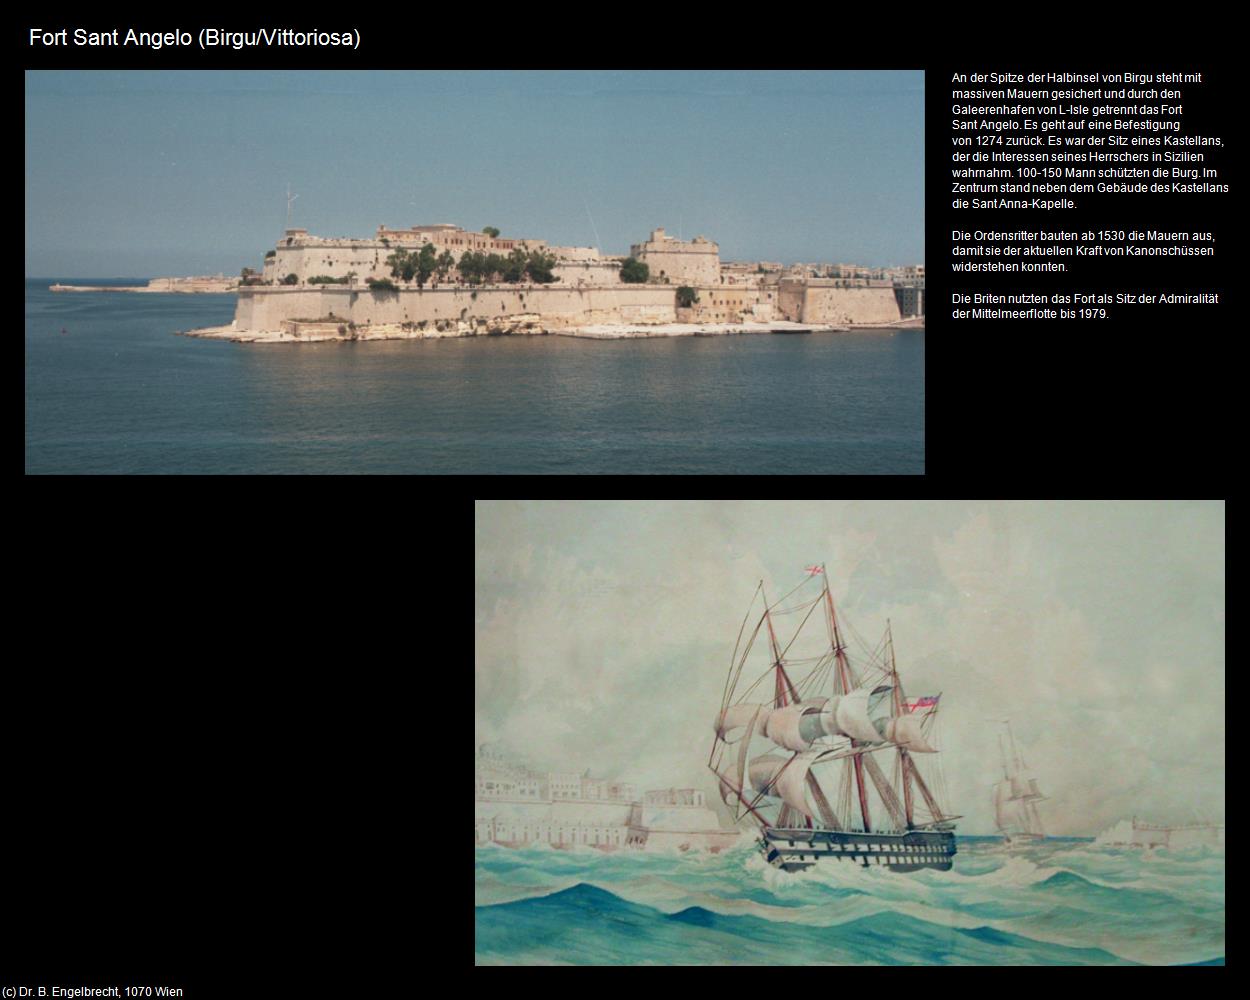 Fort St. Angelo (Birgu/Vittoriosa auf Malta) in Malta - Perle im Mittelmeer